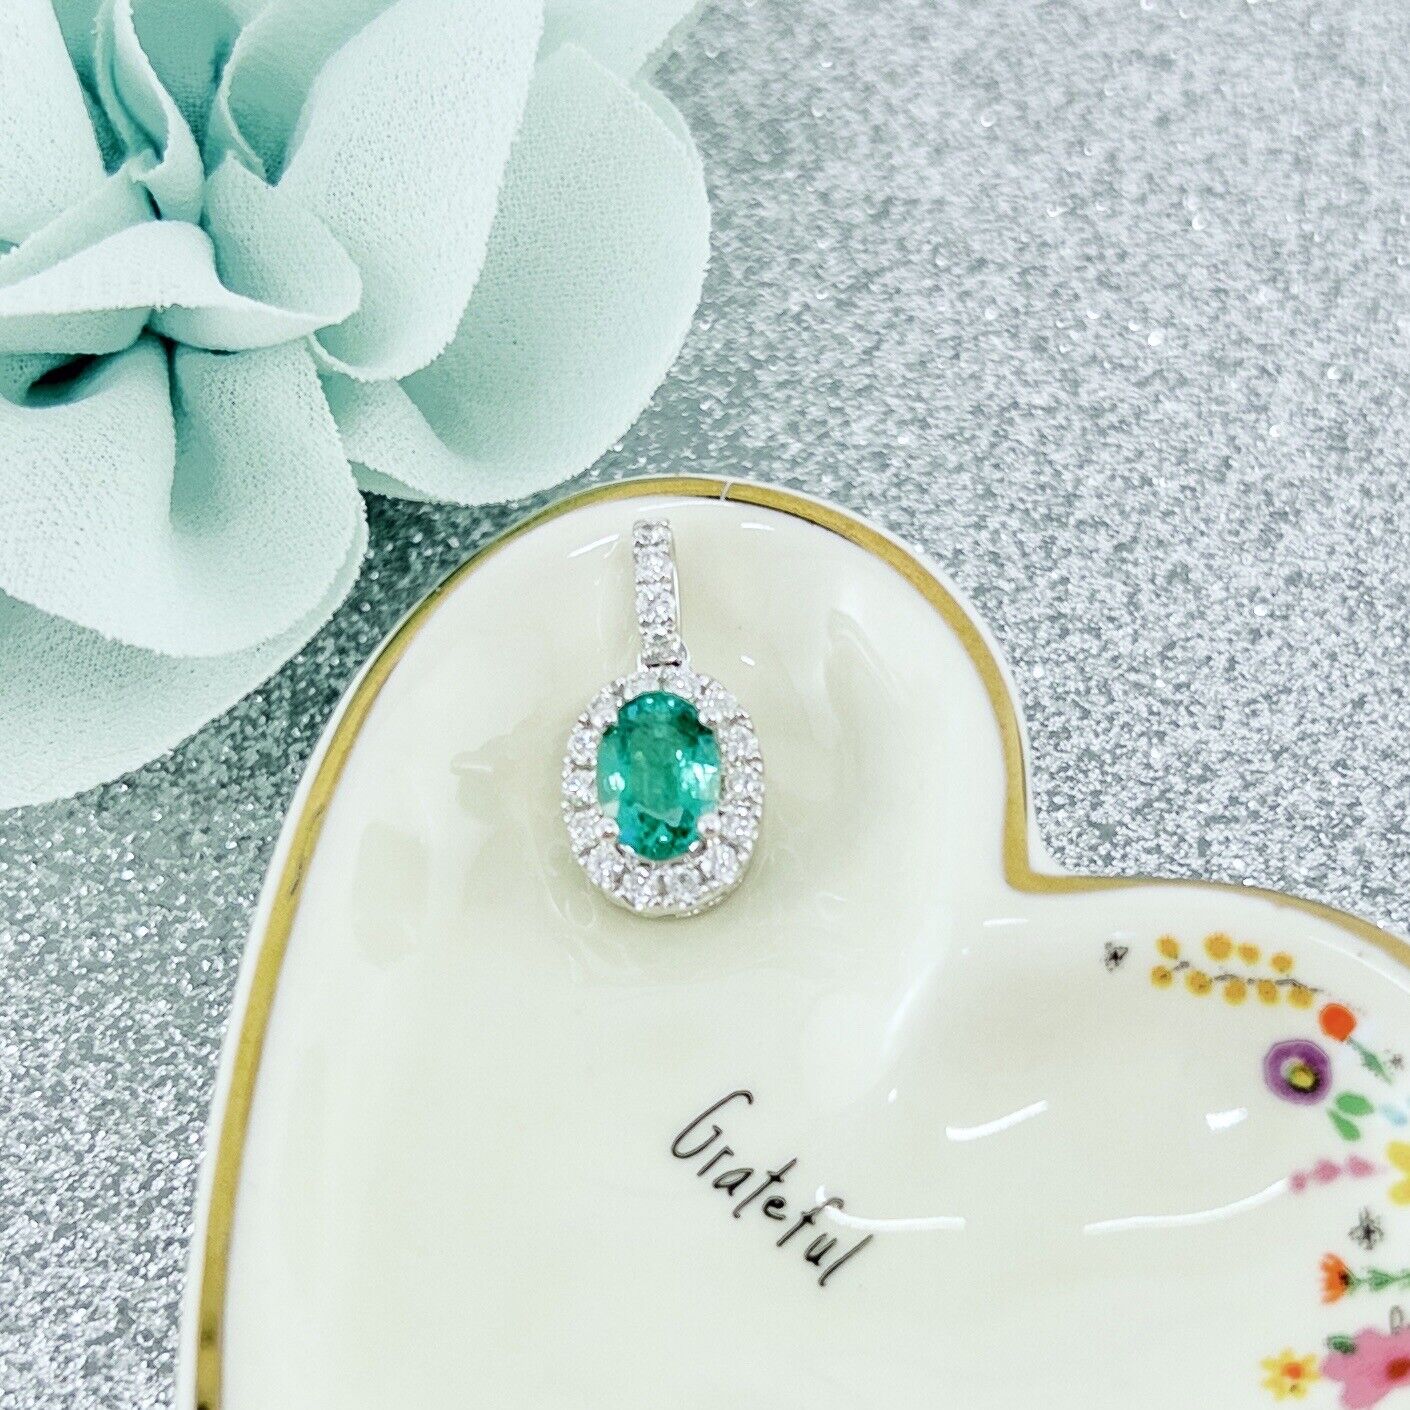 Solid 14k White Gold Genuine Colombian Emerald & Diamond Oval Pendant, New